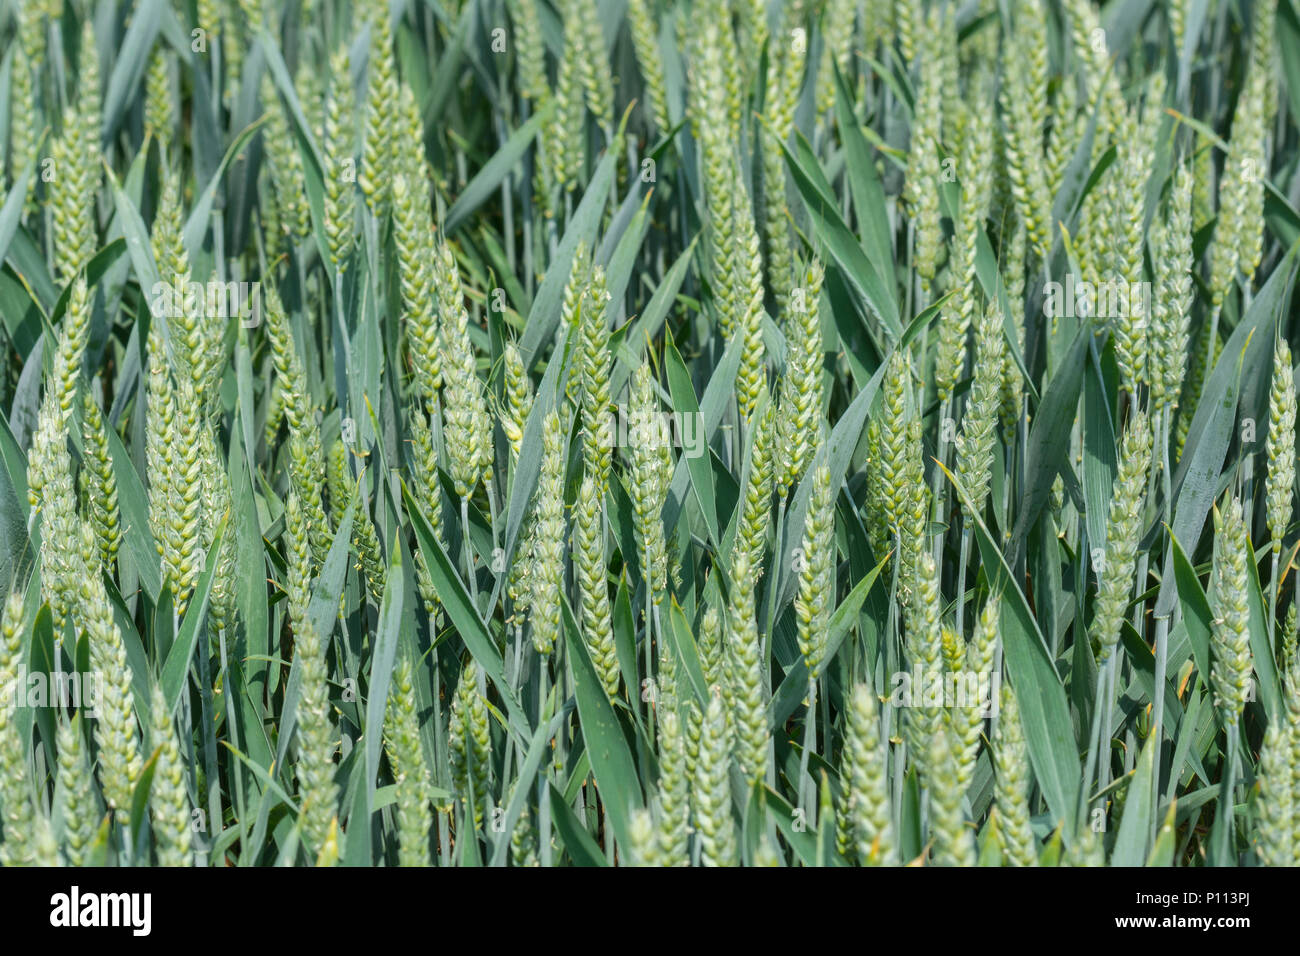 Variety of Wheat / Triticum still in its unripe green state. 2020 UK wheat crop. Stock Photo